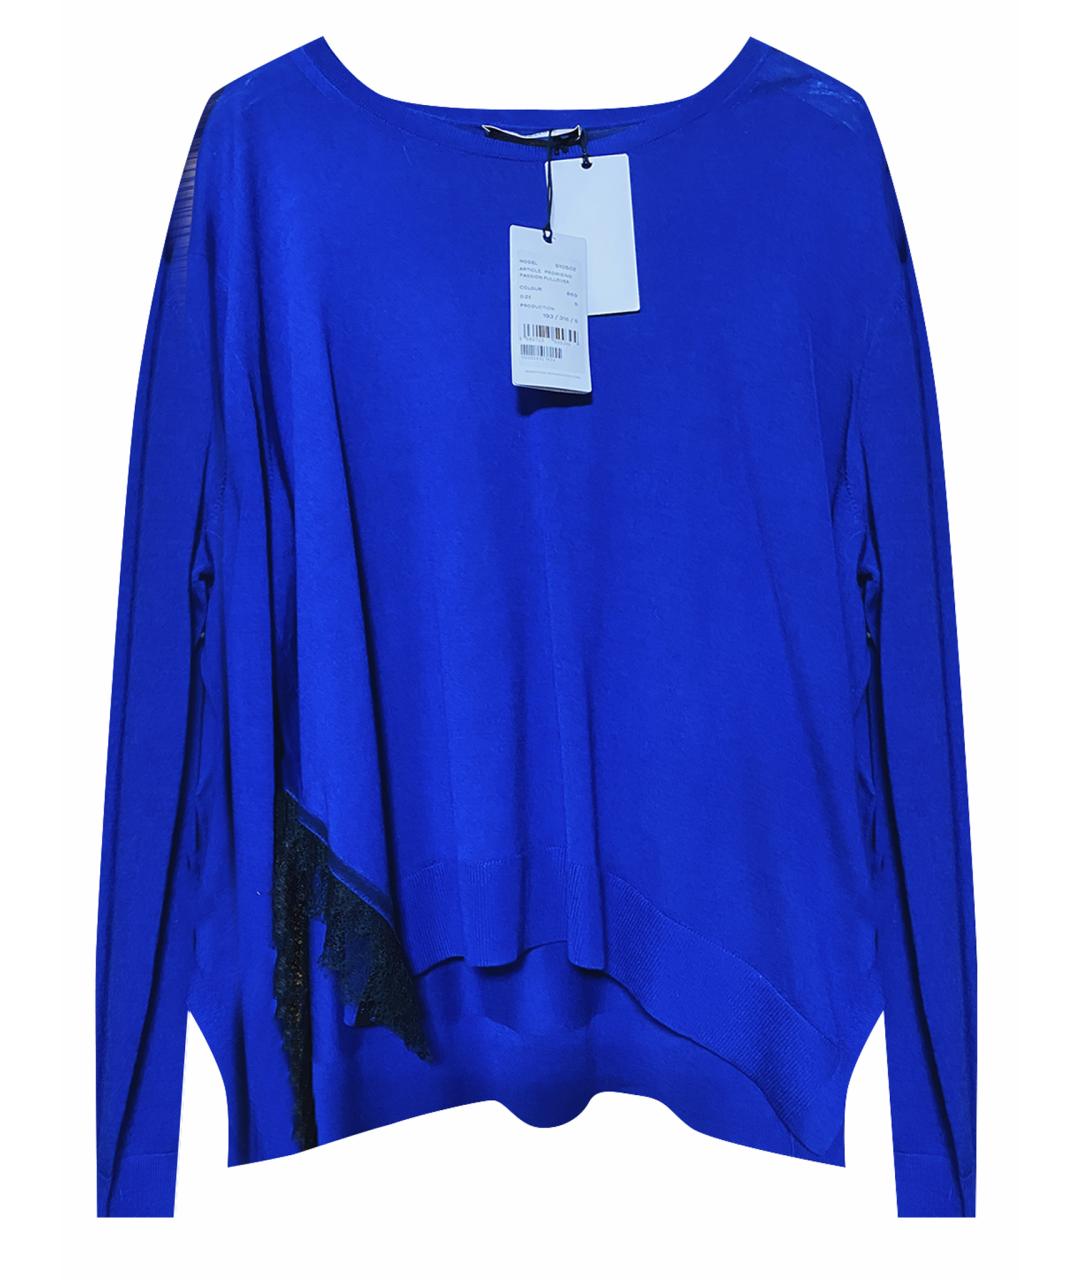 DOROTHEE SCHUMACHER Синий шерстяной джемпер / свитер, фото 1